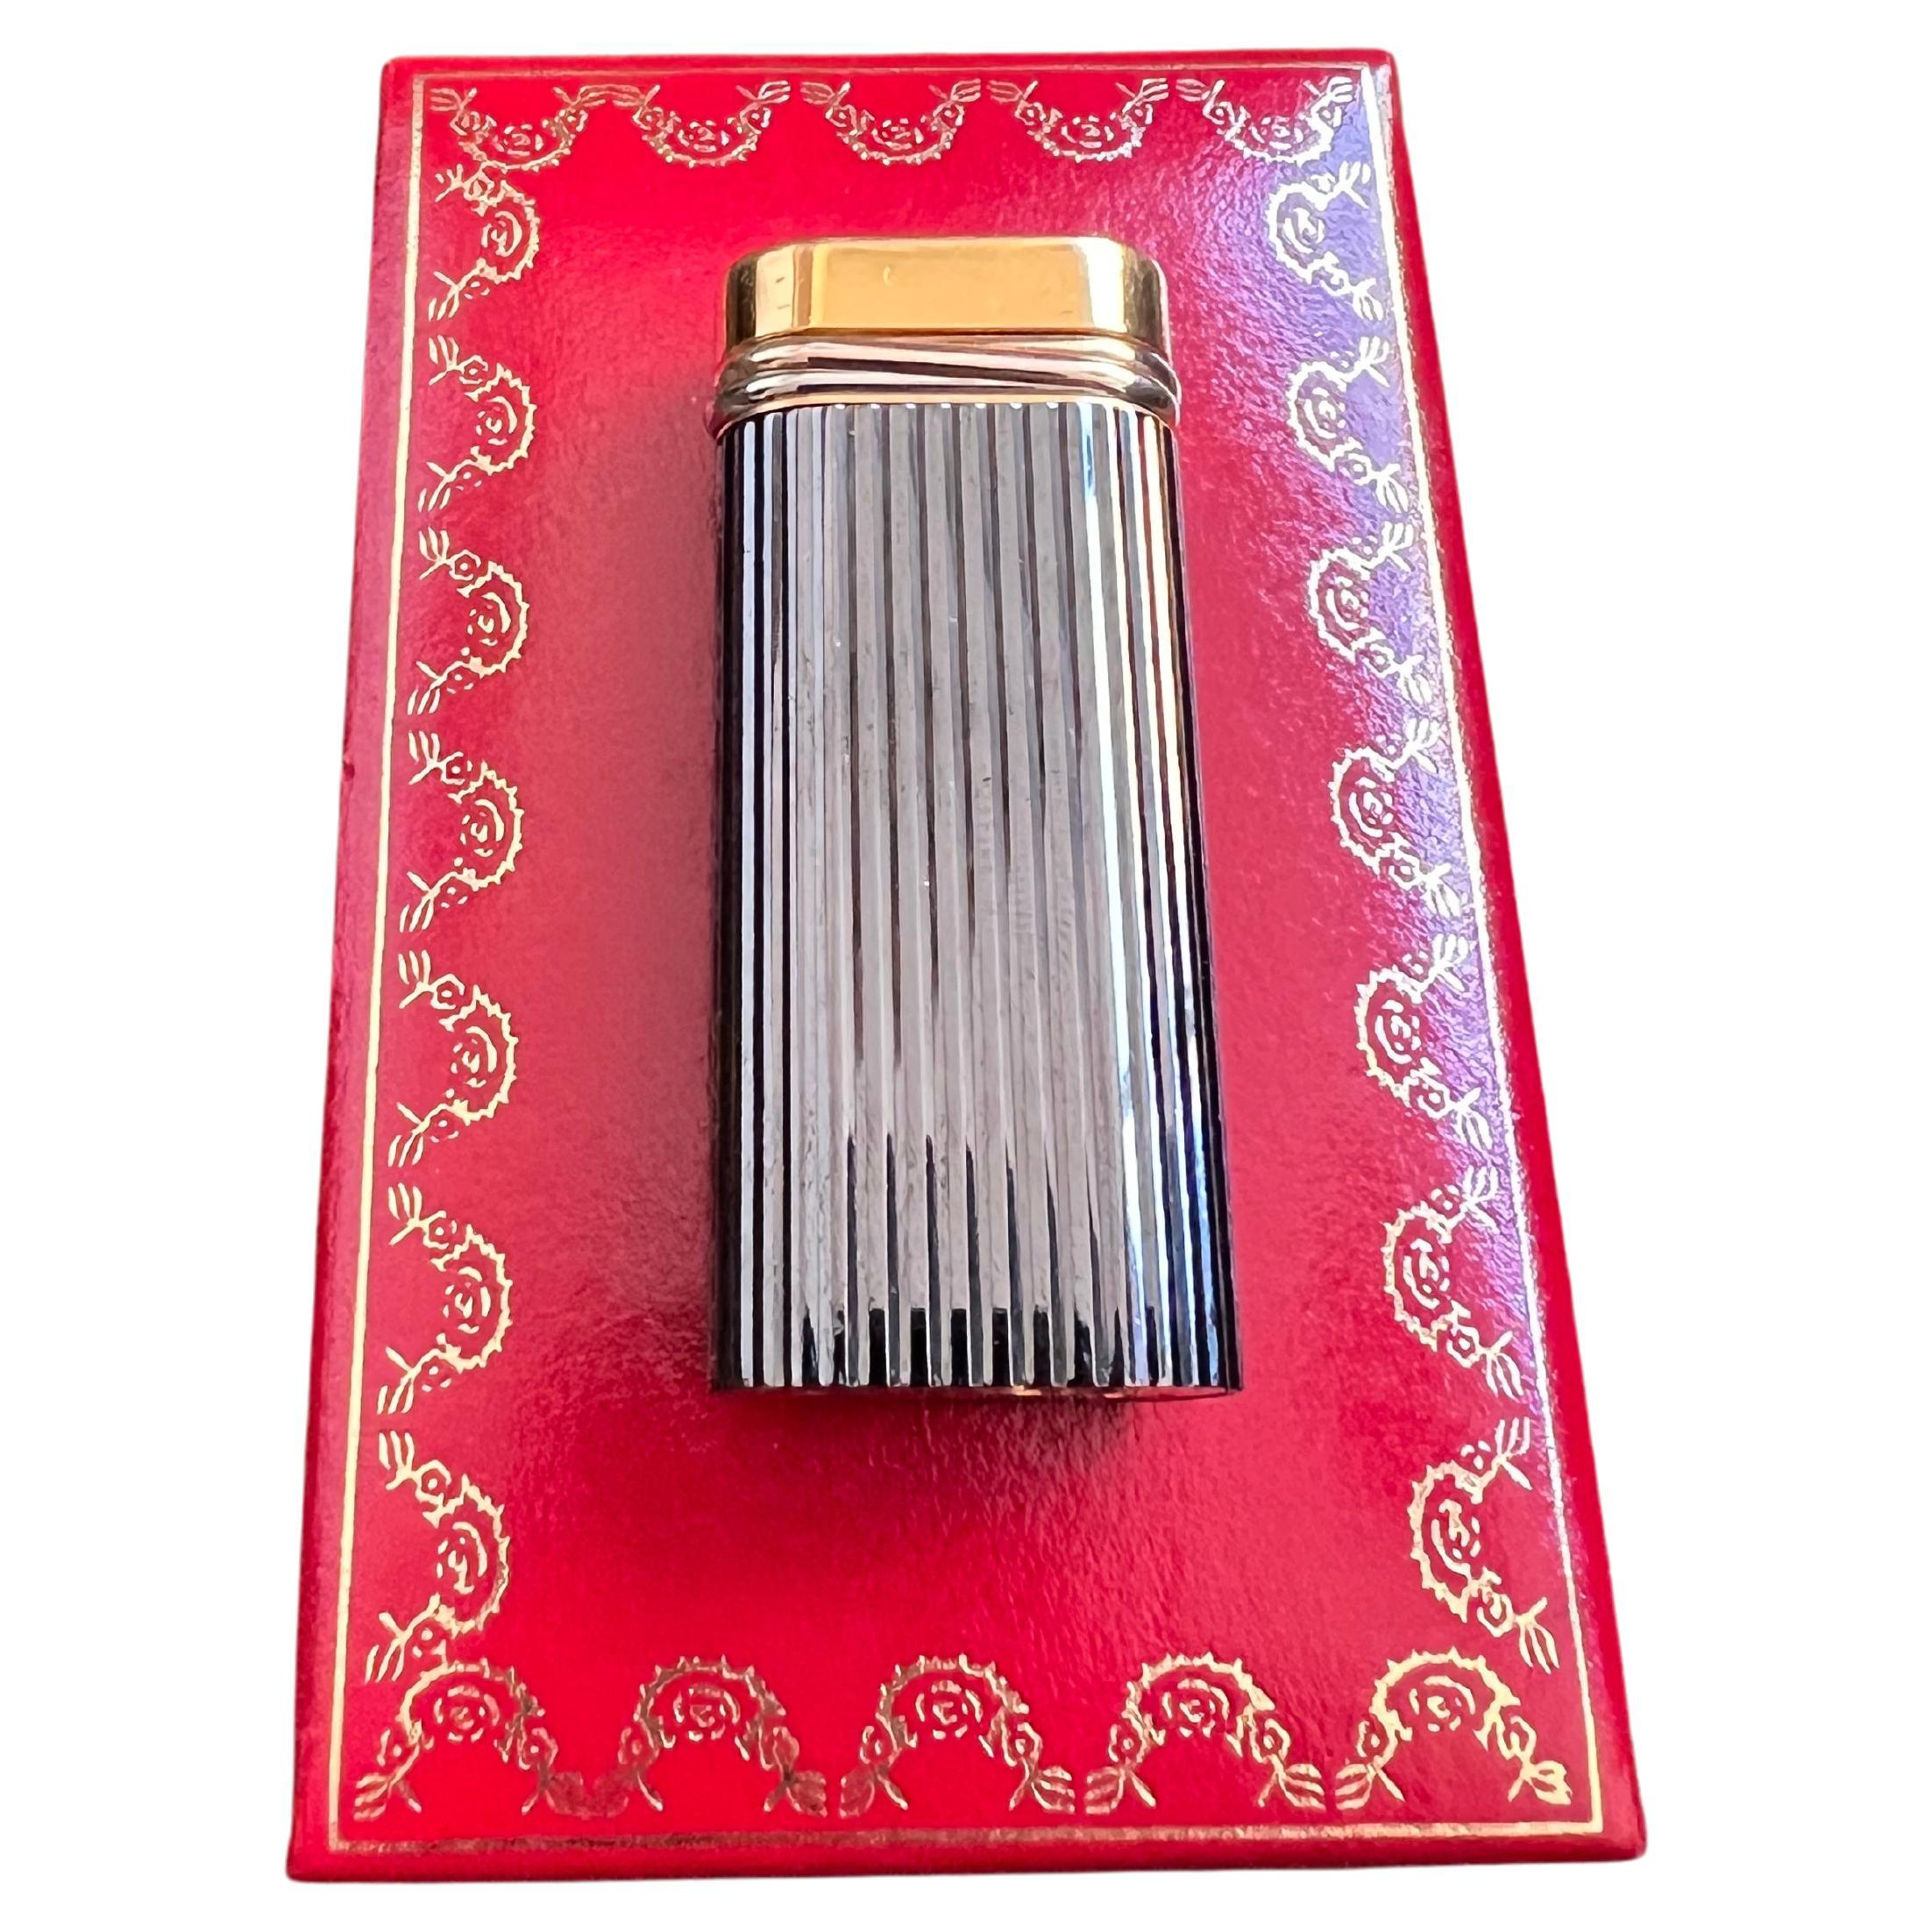 Vintage Cartier Lighter Short “Trinity” Rare Gold and Gunmetal “Godron” Model